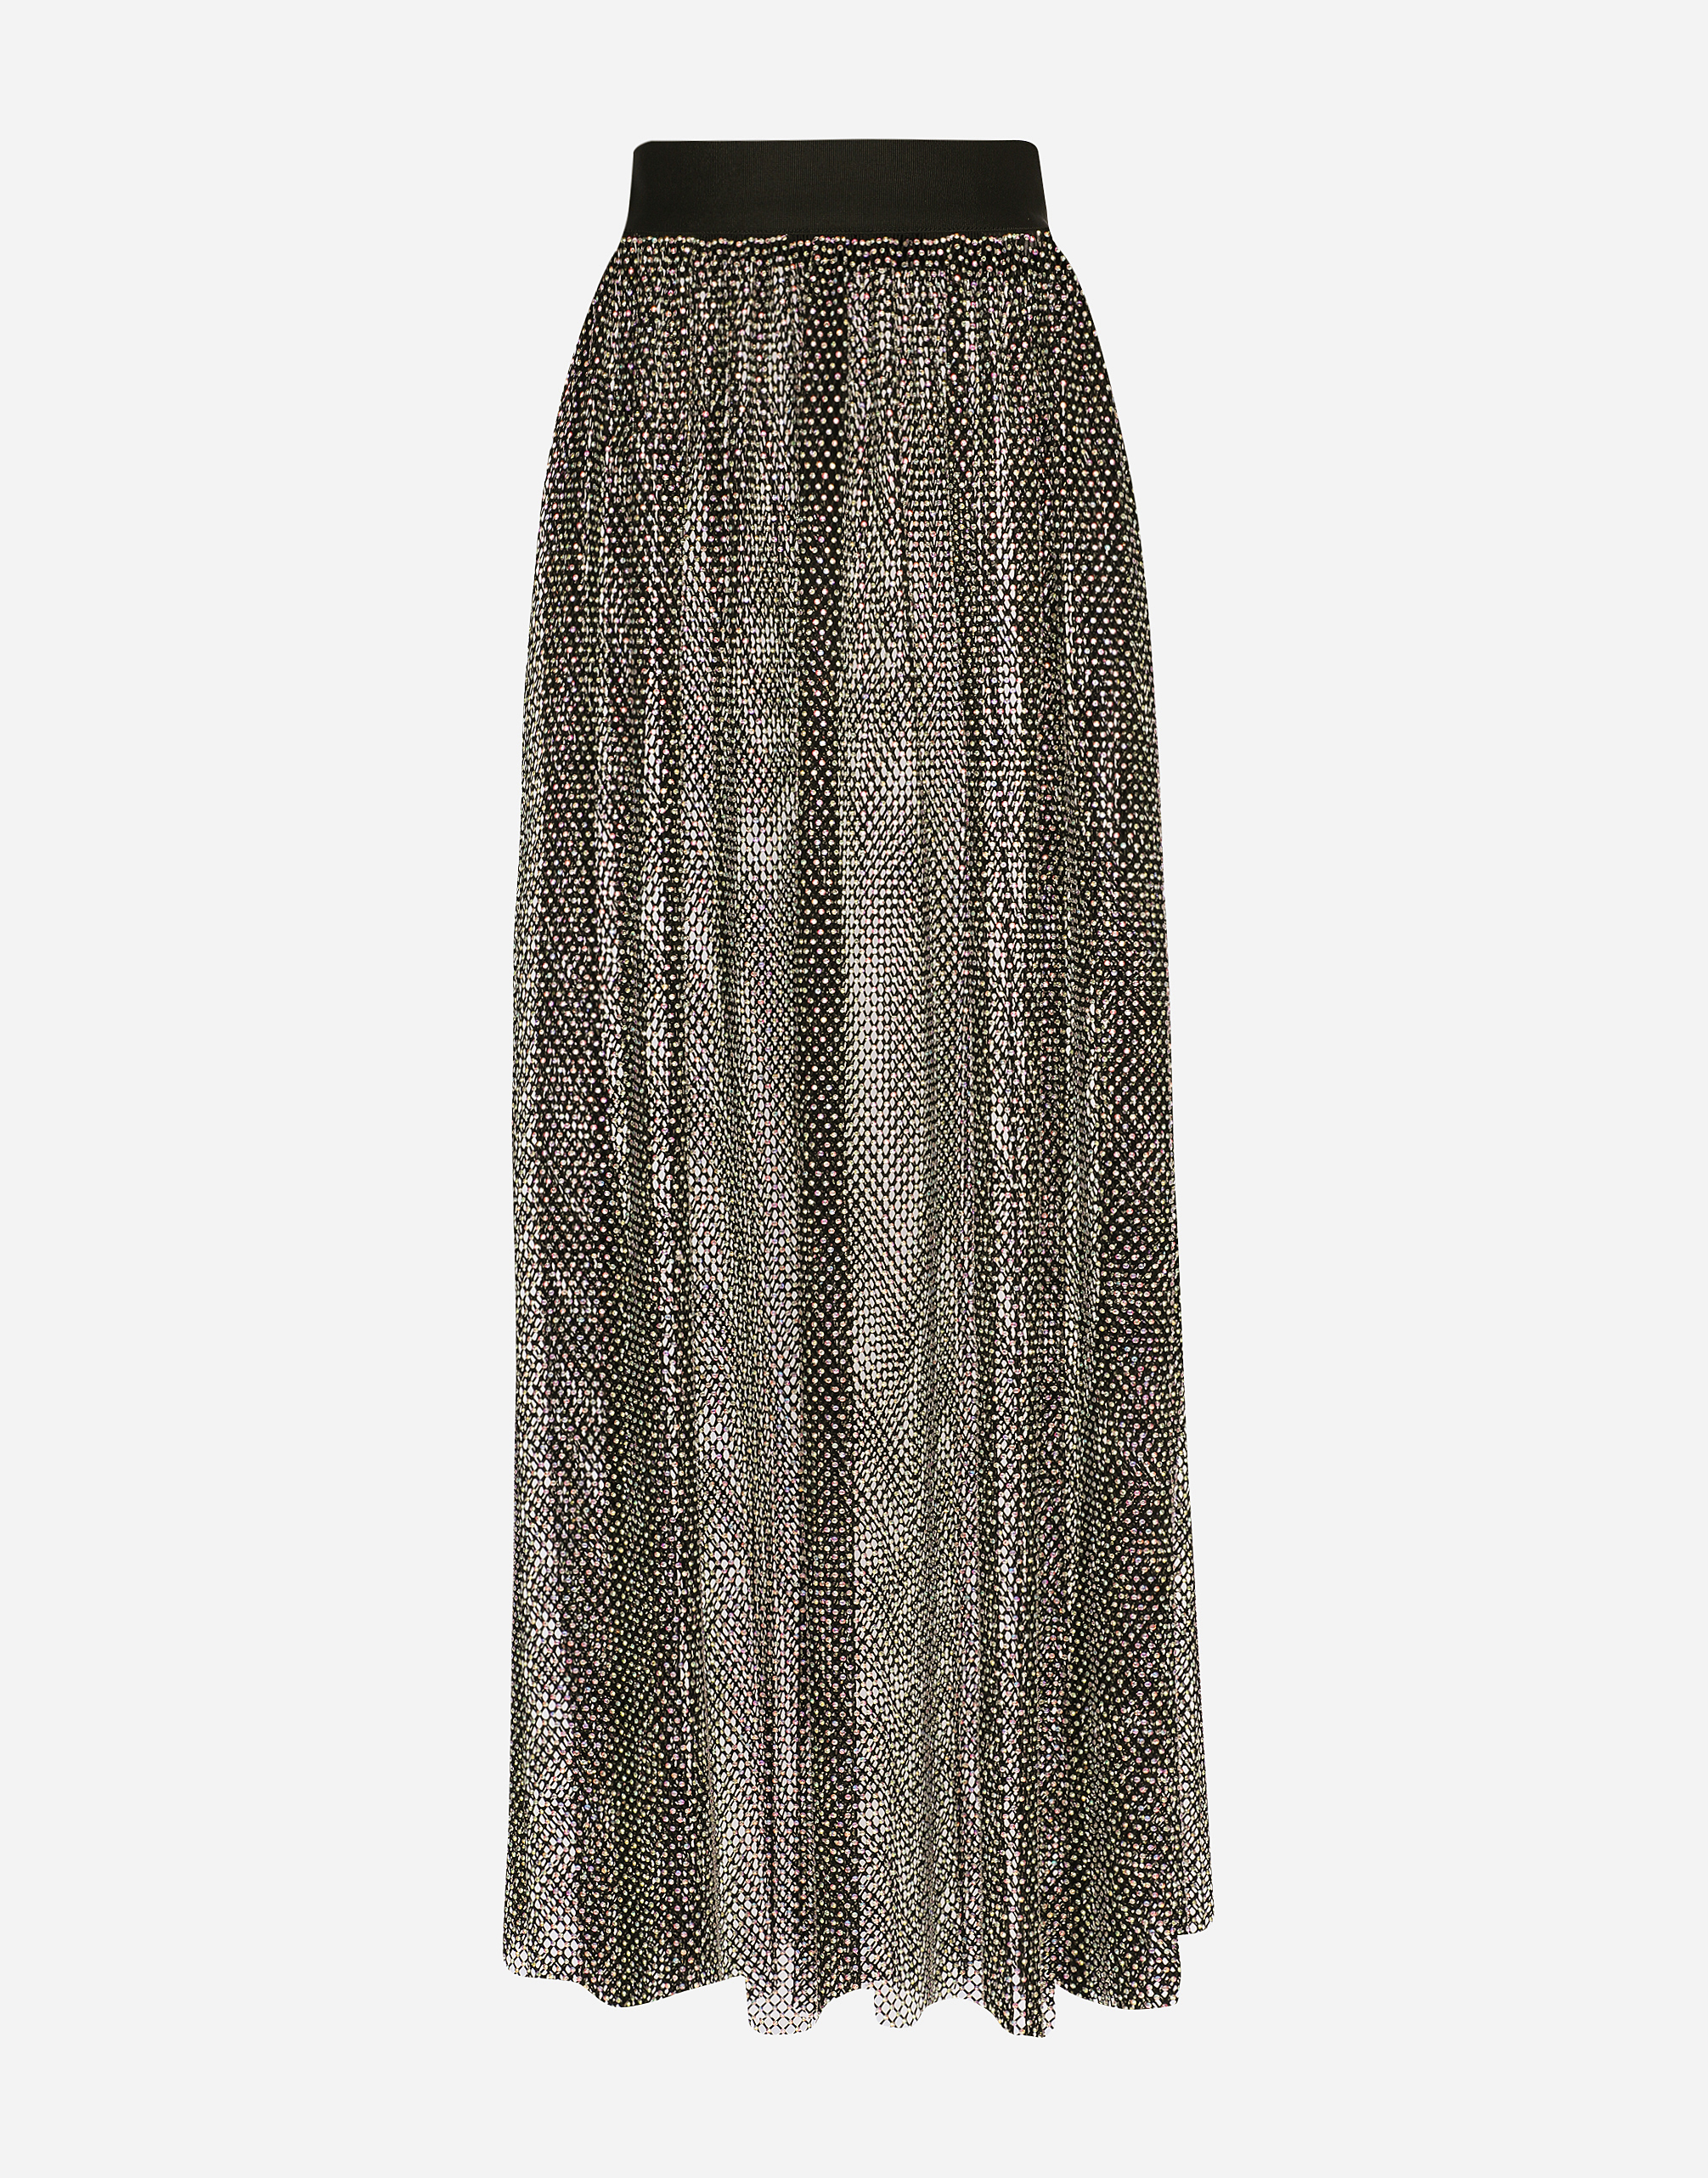 Mesh skirt with rhinestone appliqués in Black